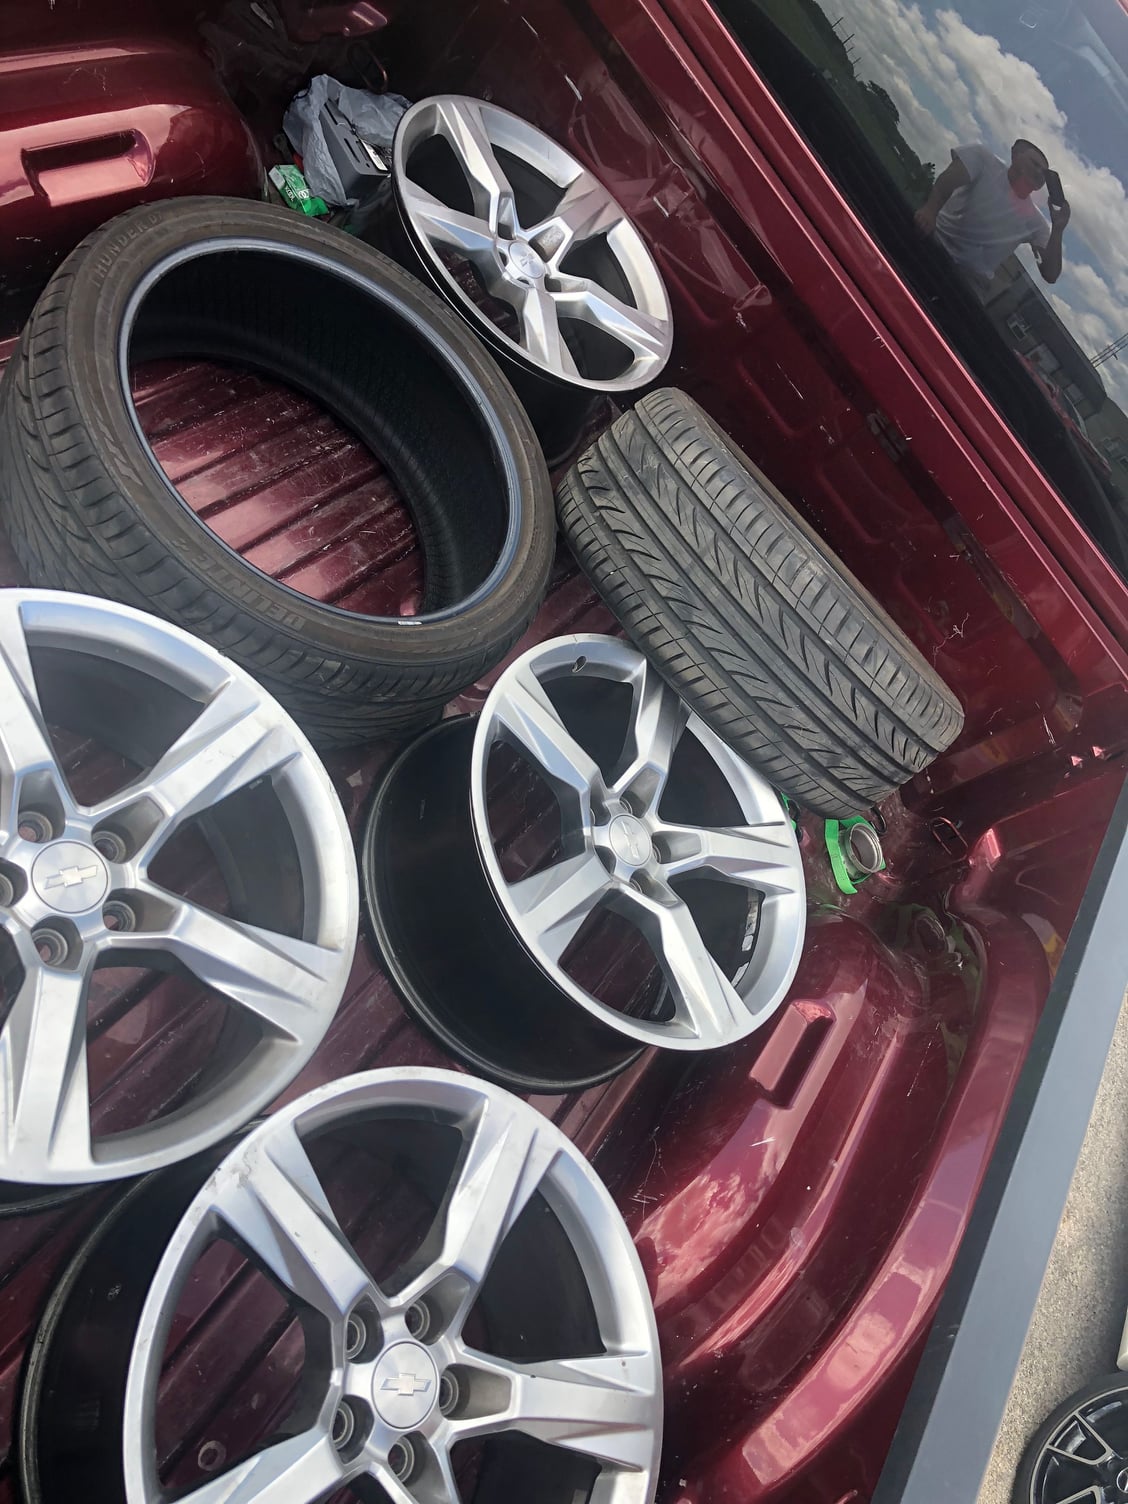  - 2018 camaro ss wheels and rims - Van, TX 75790, United States